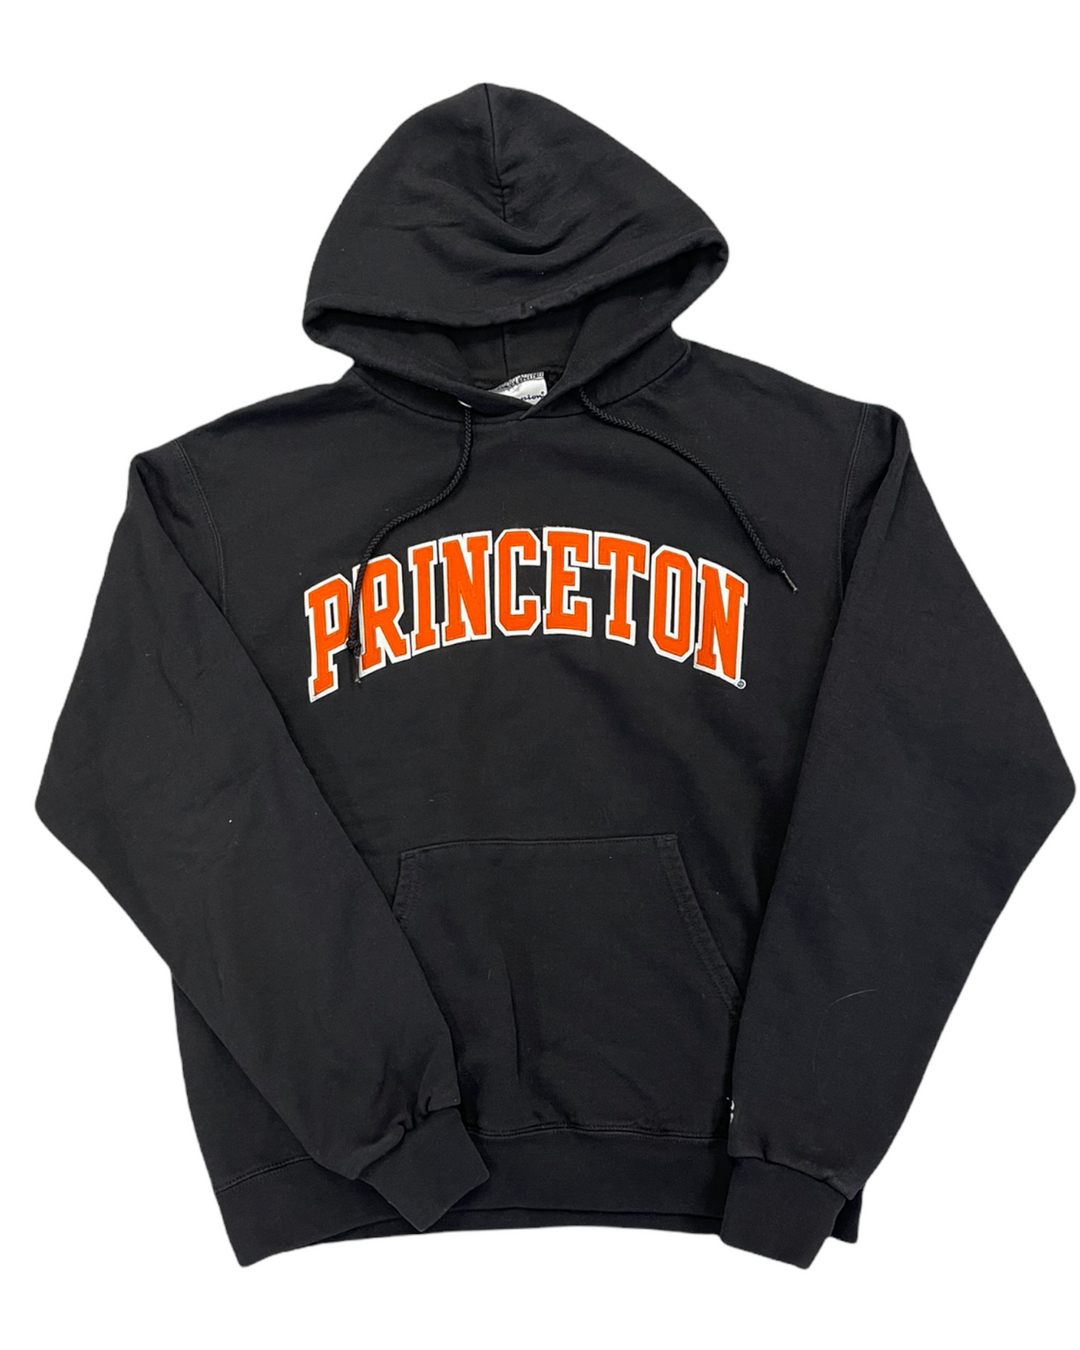 Princeton Vintage Sweatshirt